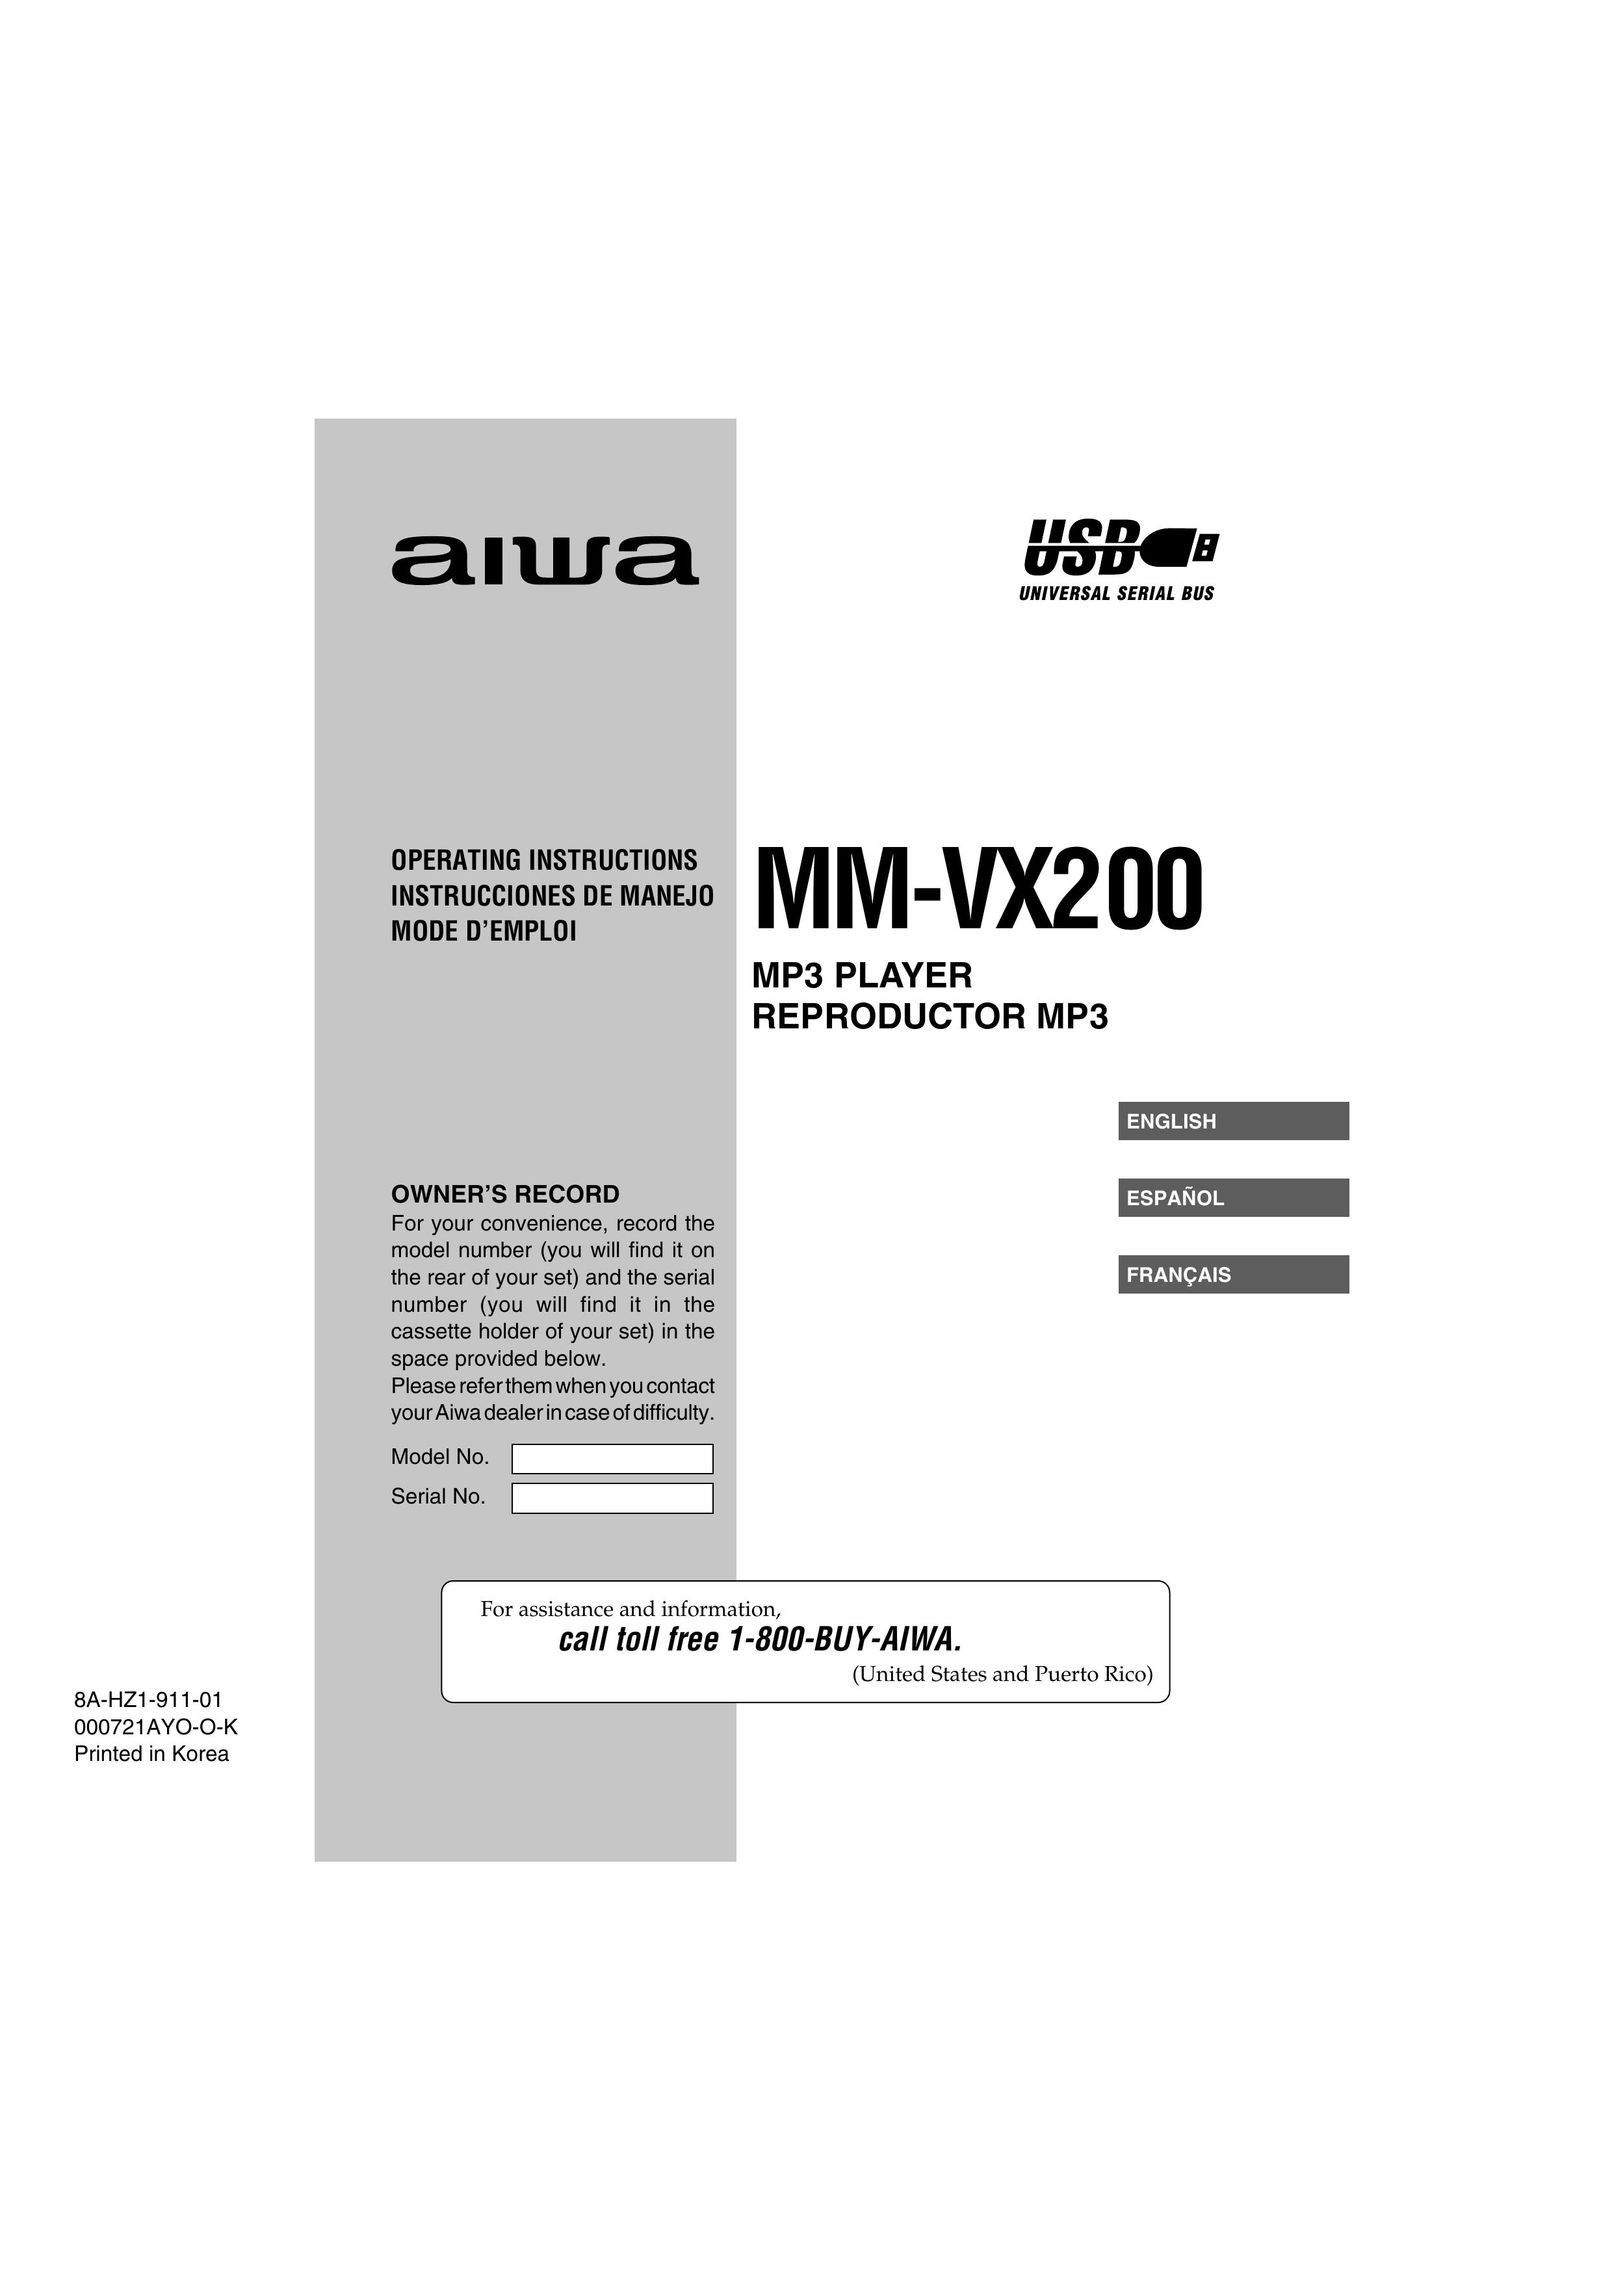 Aiwa MM-VX200 MP3 Player User Manual